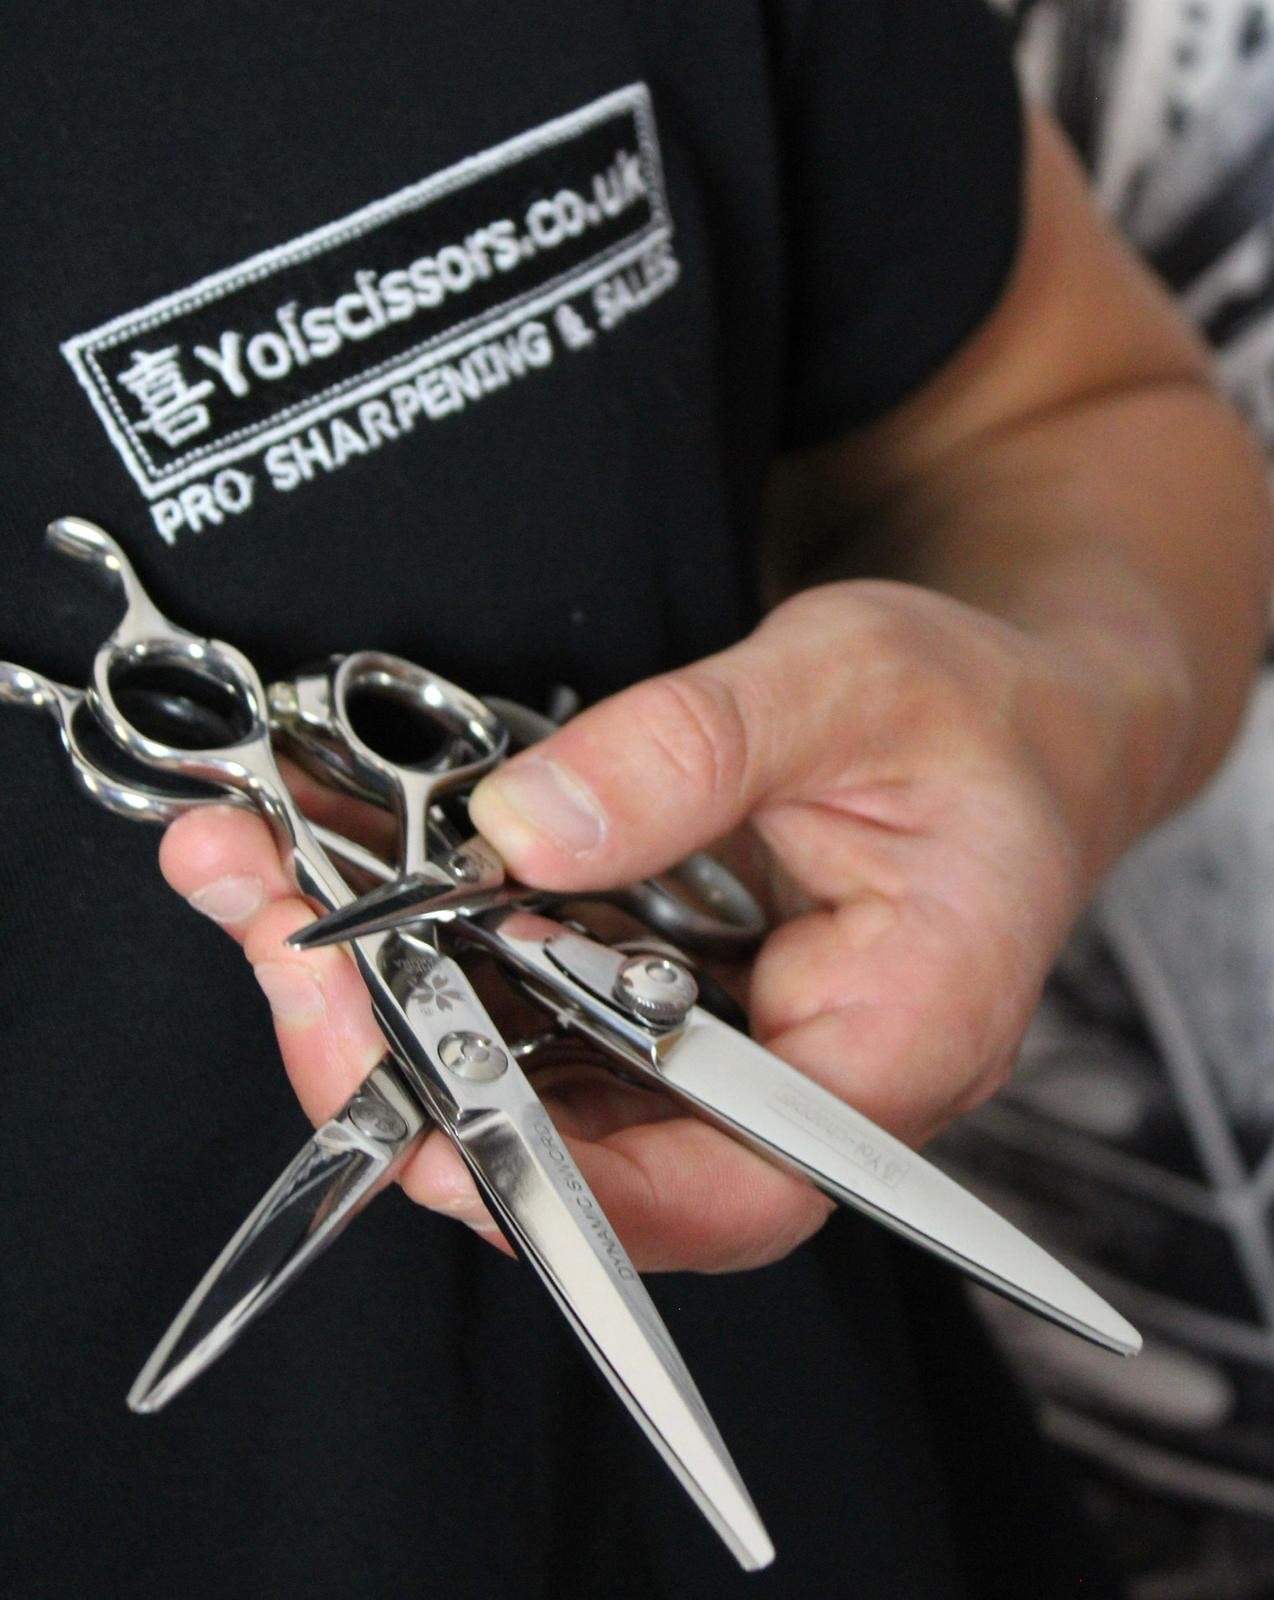 yoiscissors Sharpening Scissor Sharpening